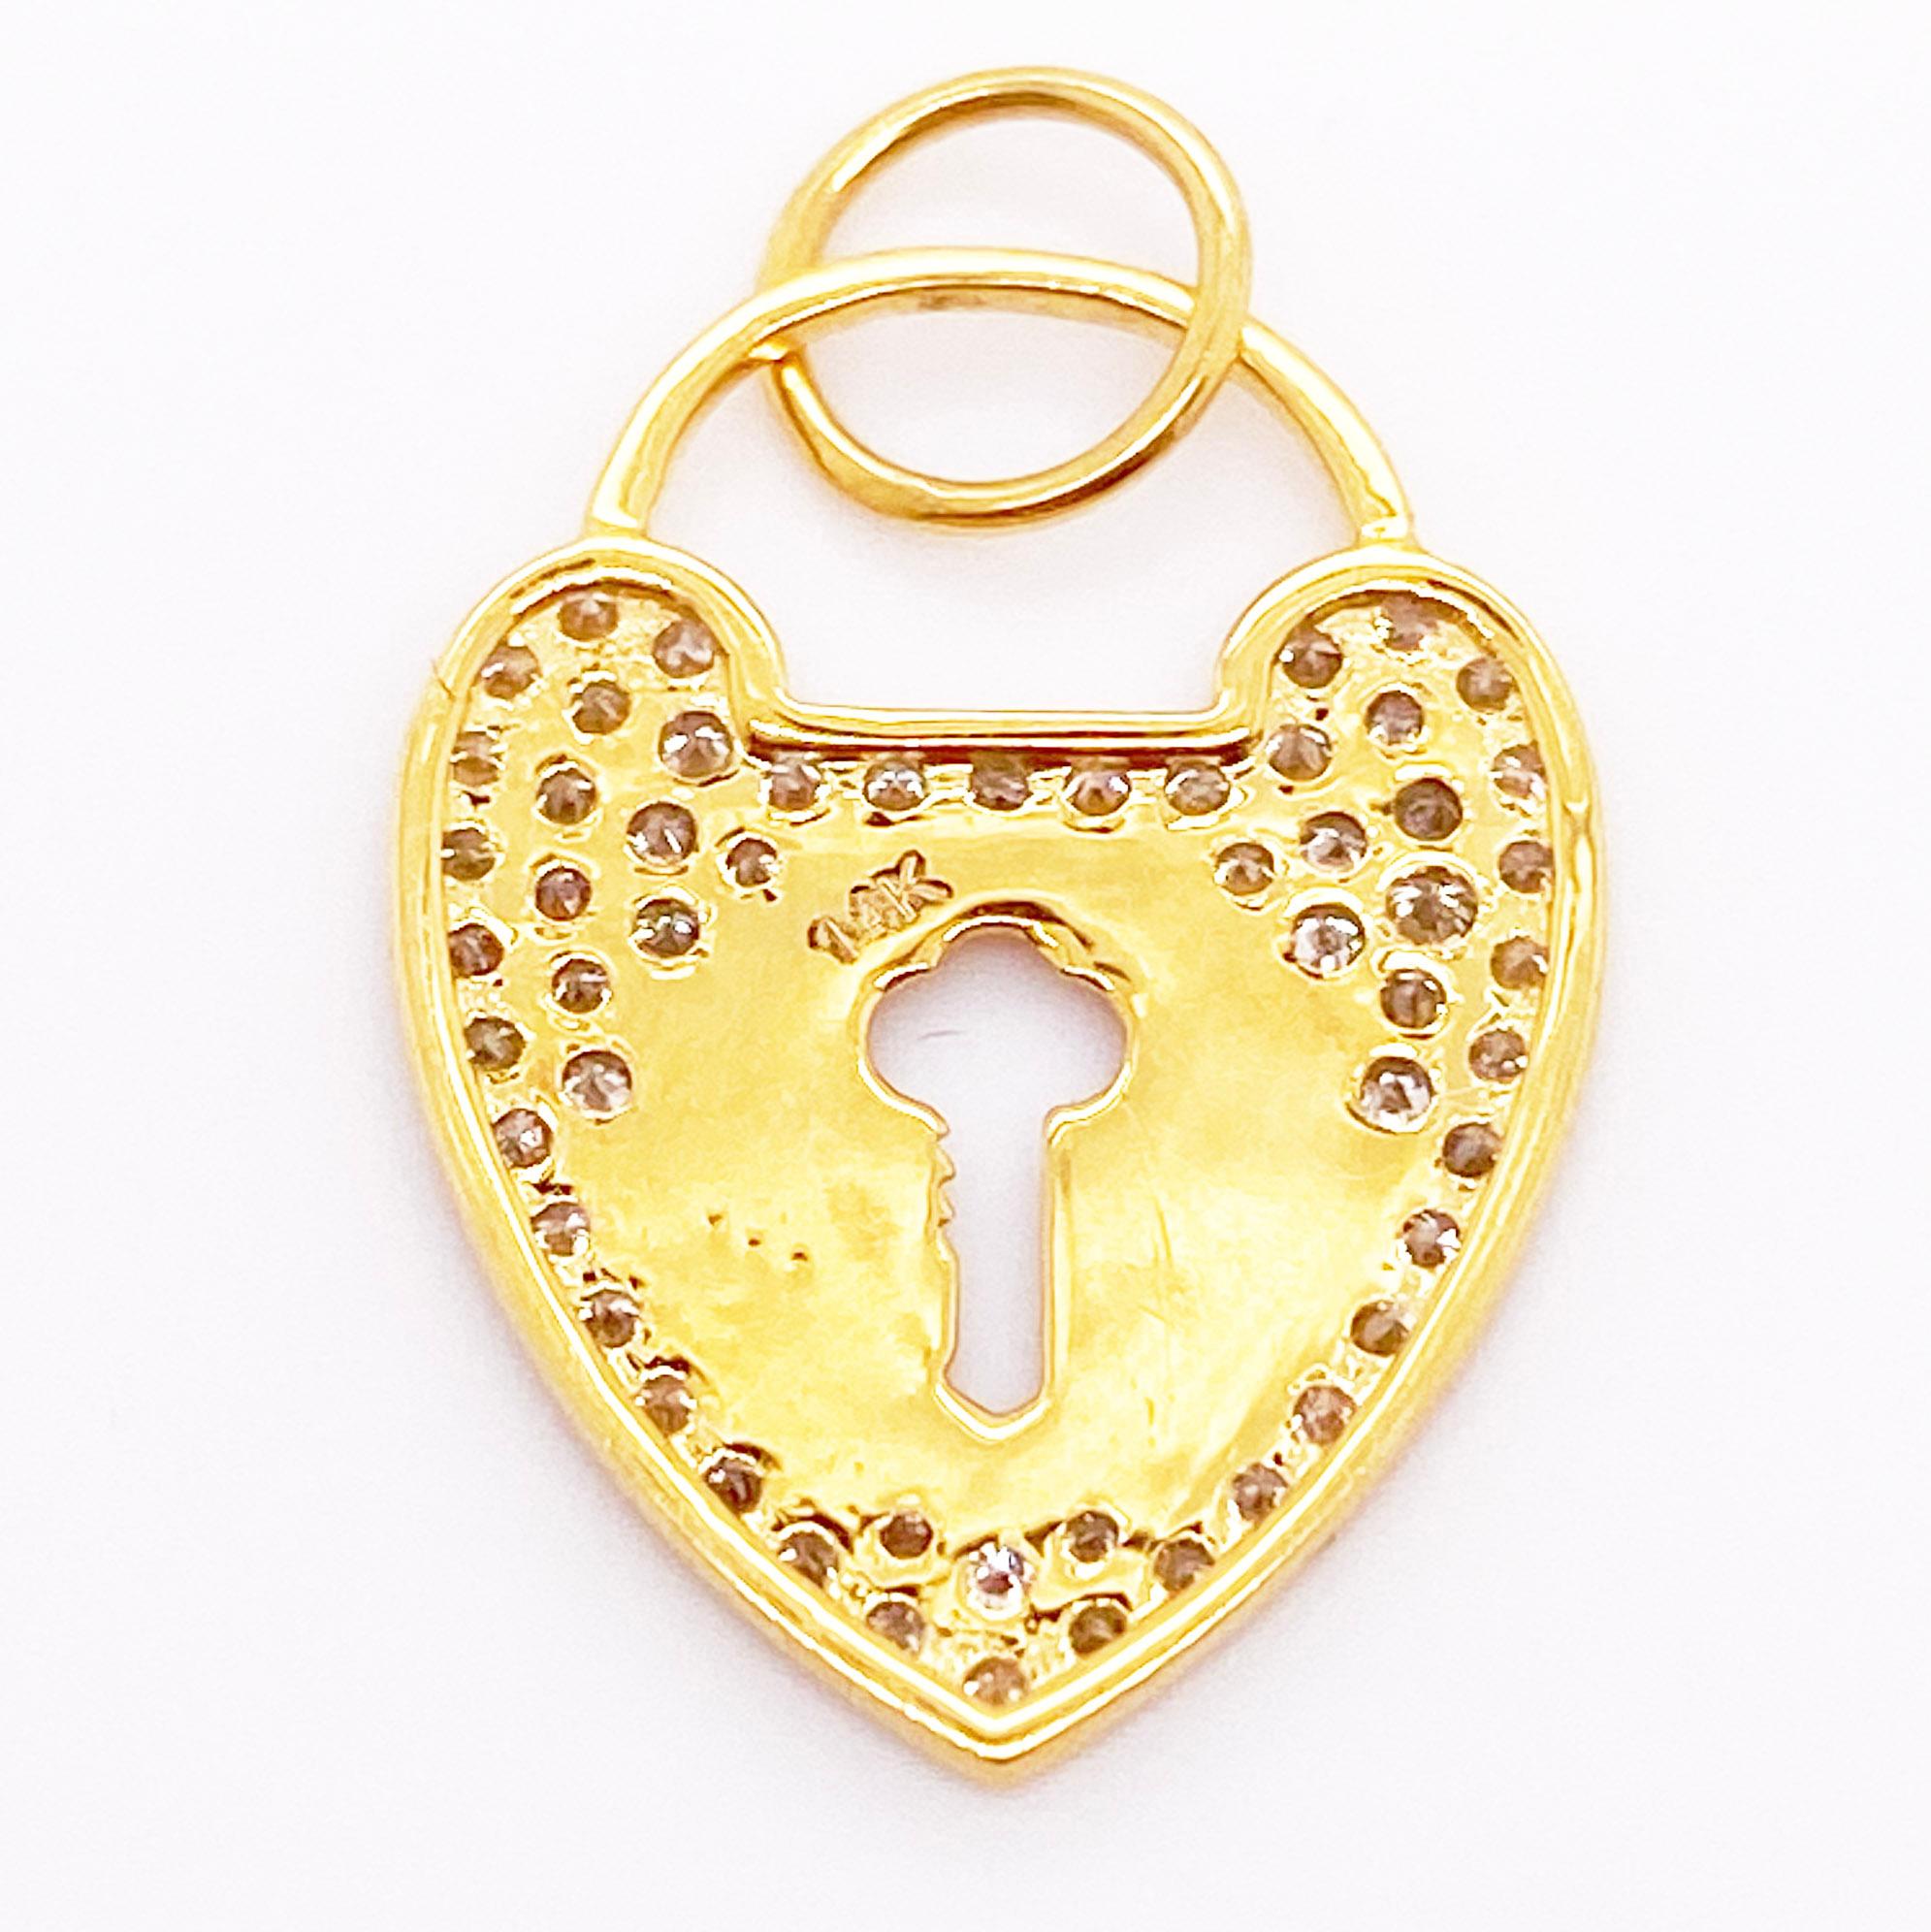 Contemporary Heart Locket Charm, Locket w Heart Key Pendant w 54 Diamonds, Diamond Locket